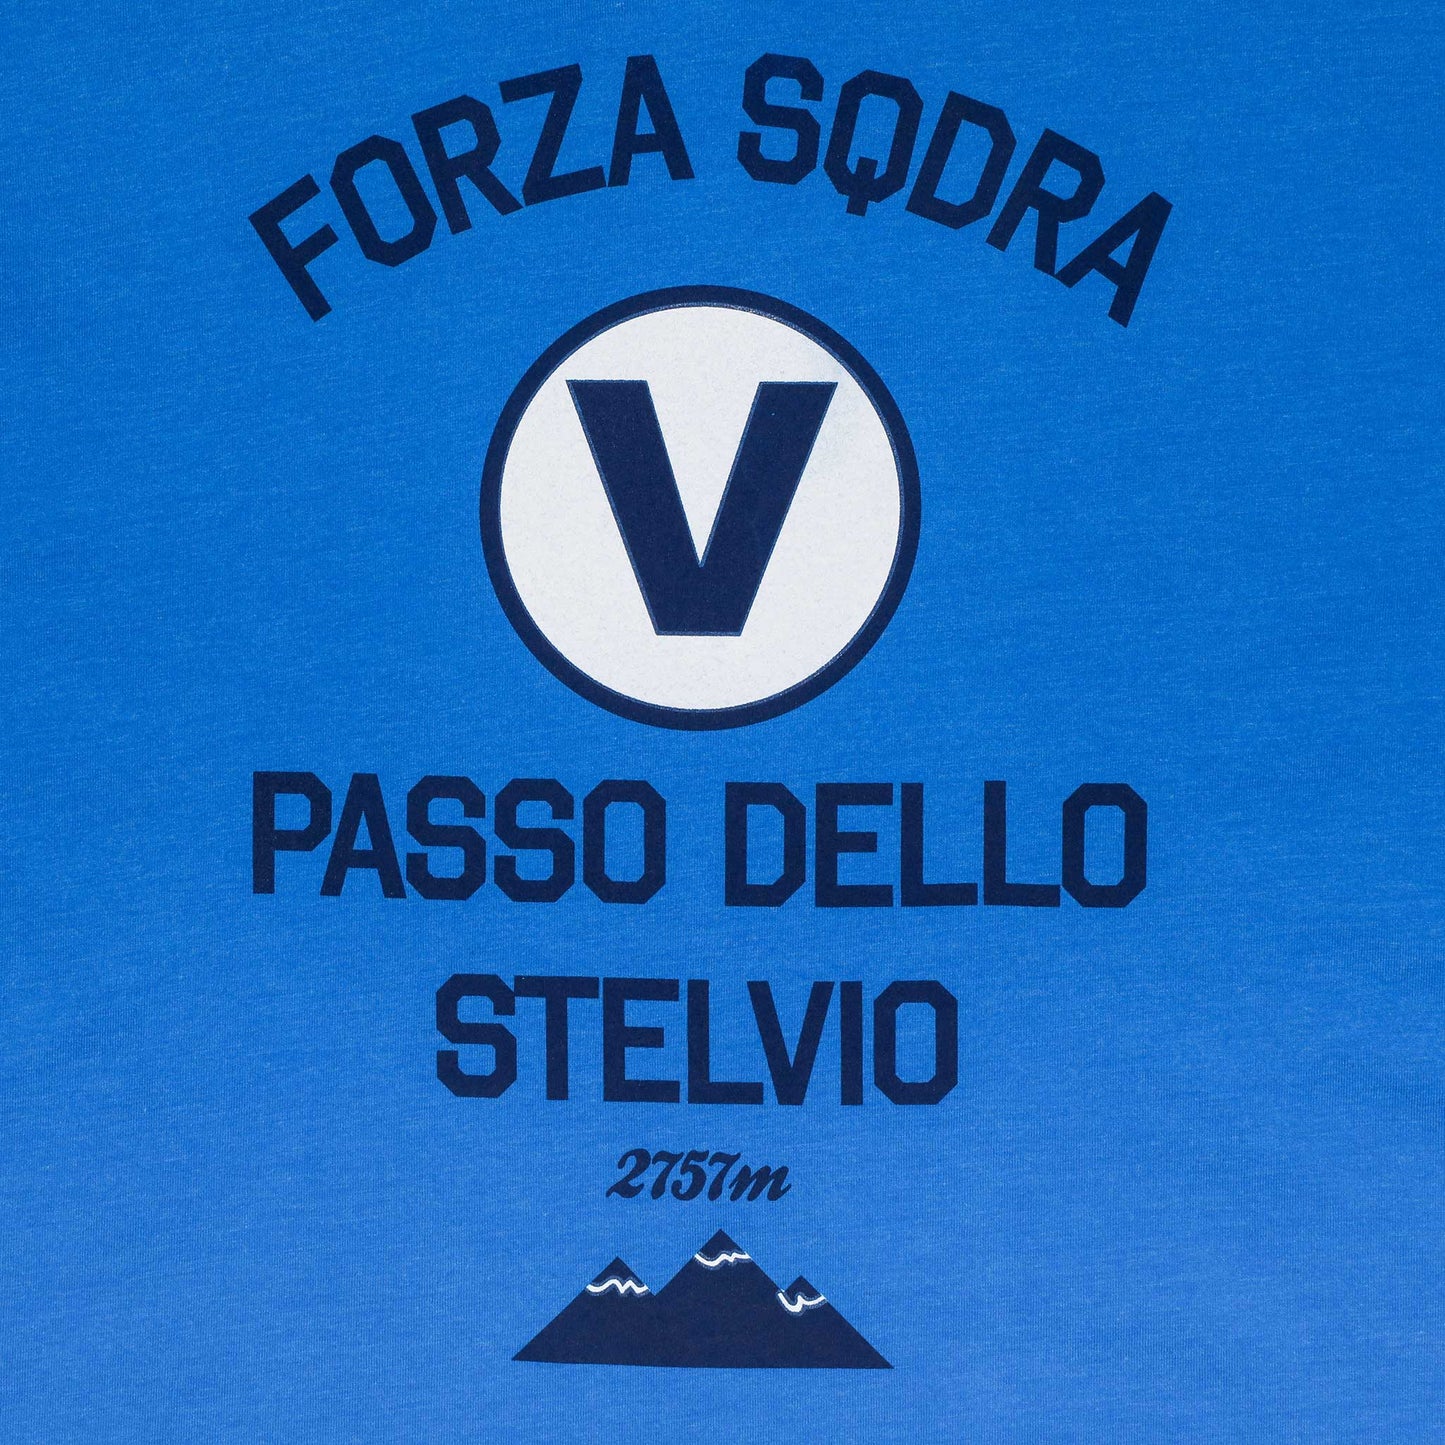 Men's Passo Dello Stelvio Teal V-Neck T-Shirt-Vaughn de Heart